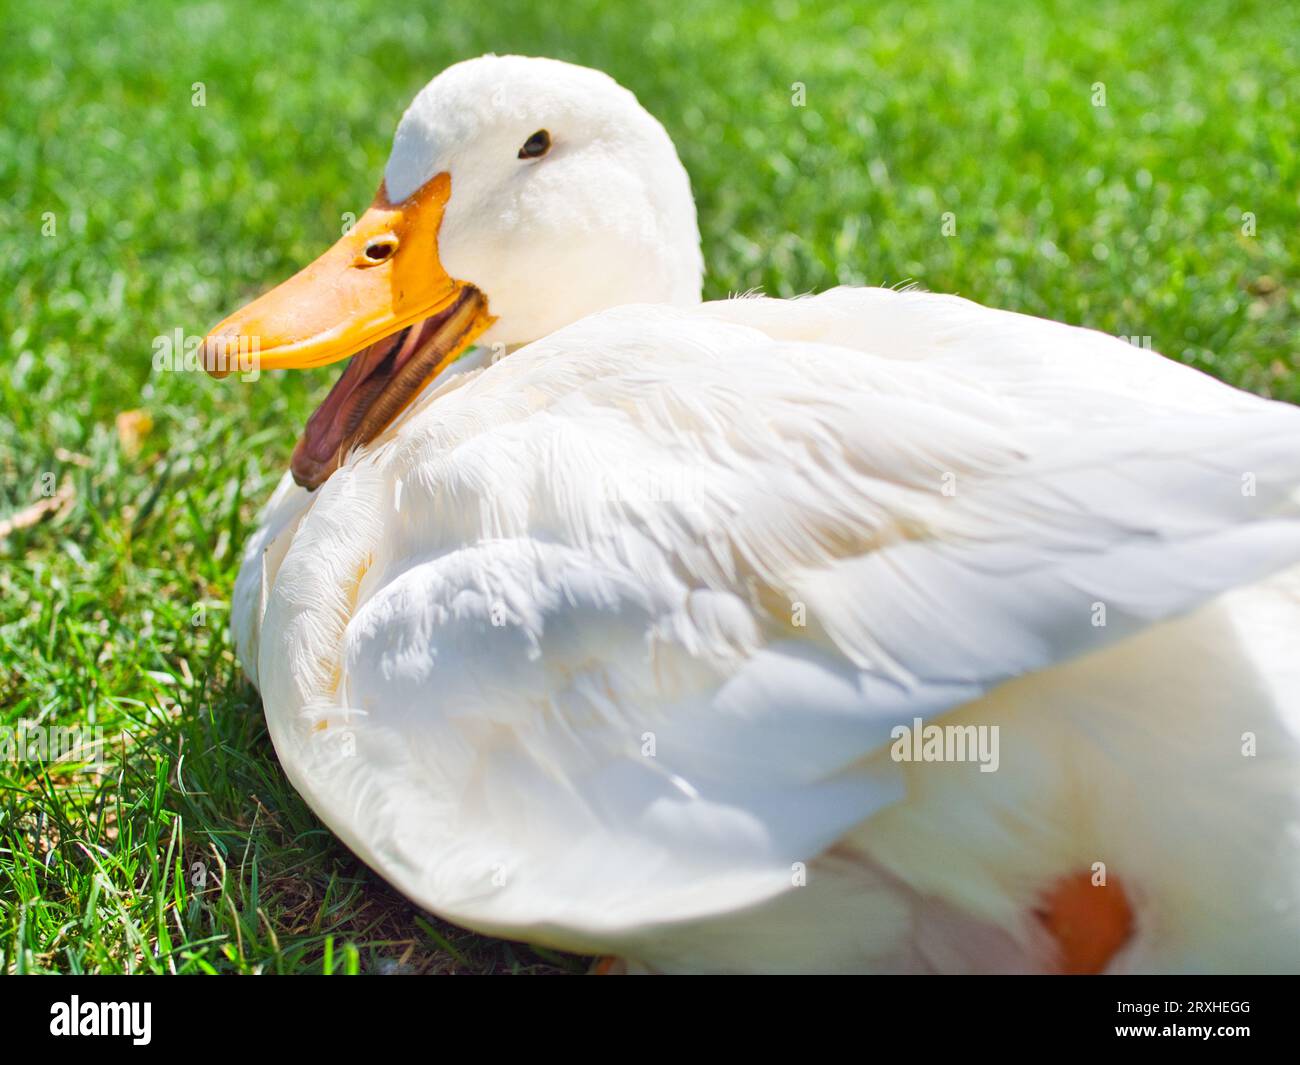 White duck with open yellow beak sitting on grass Stock Photo